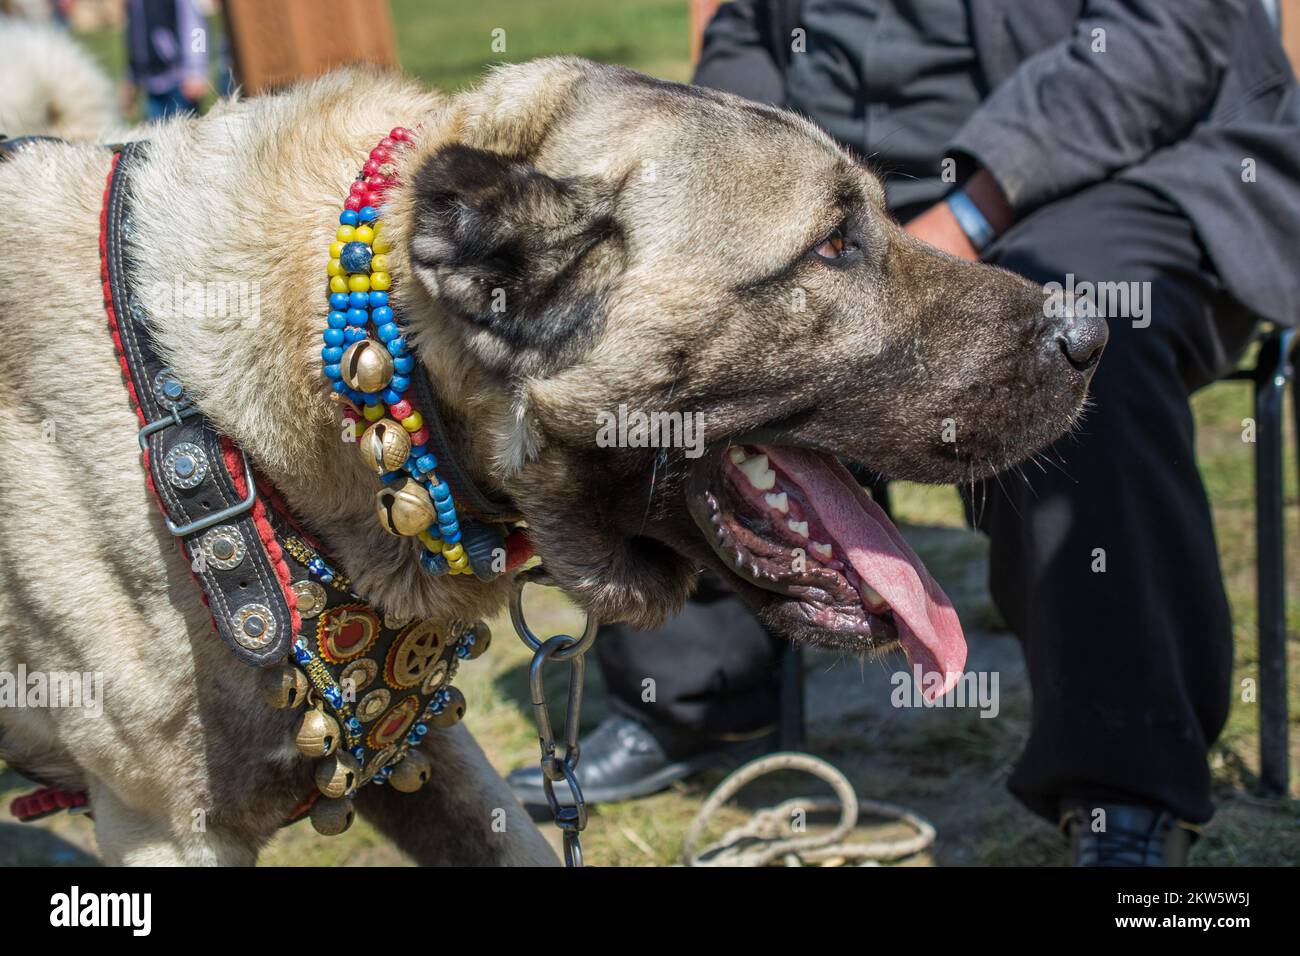 Turkish breed shepherd dog Kangal as livestock guarding dog Stock Photo